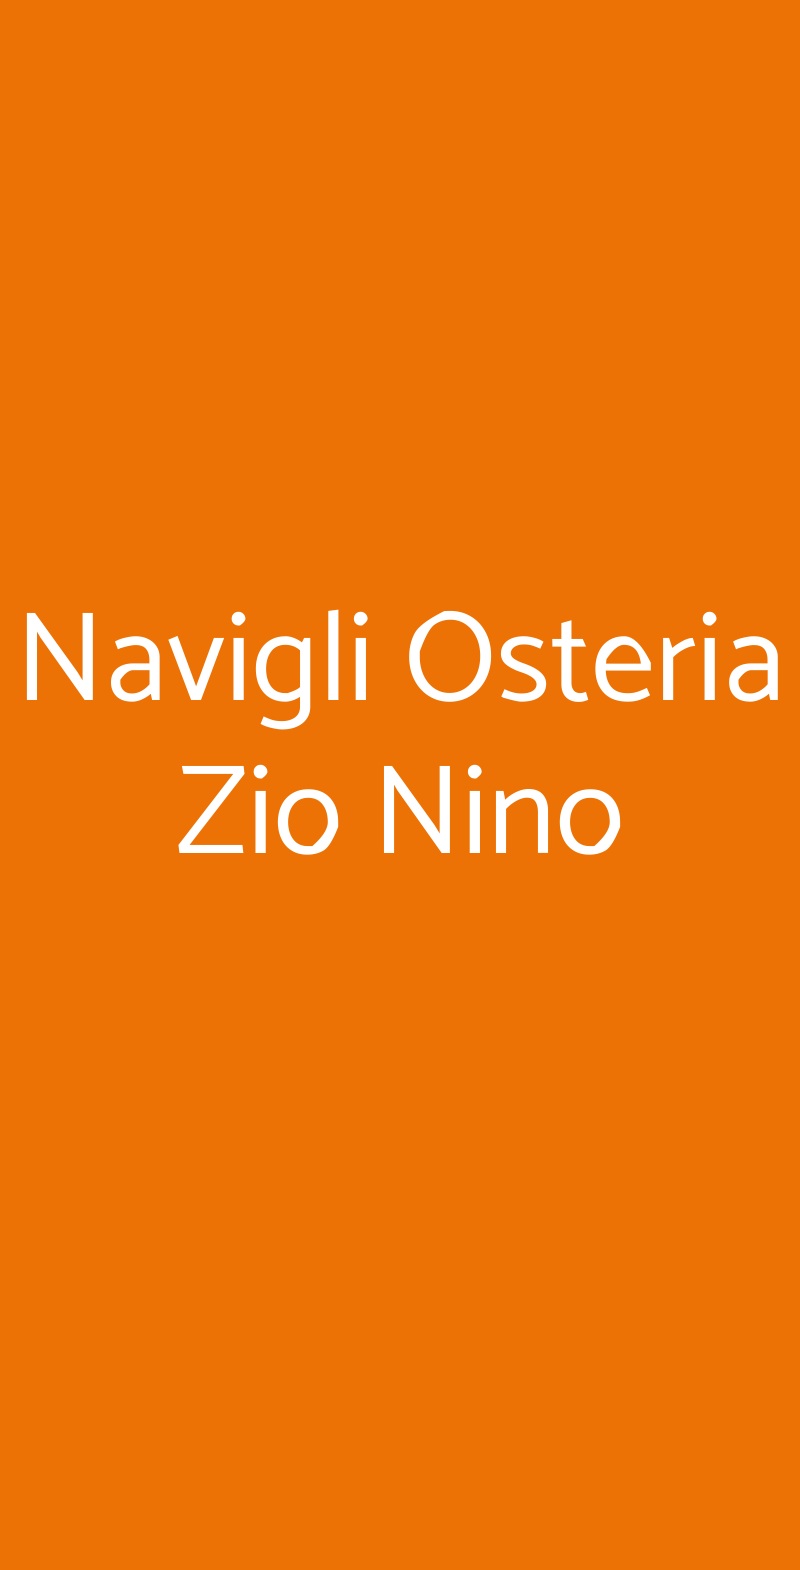 Navigli Osteria Zio Nino Milano menù 1 pagina